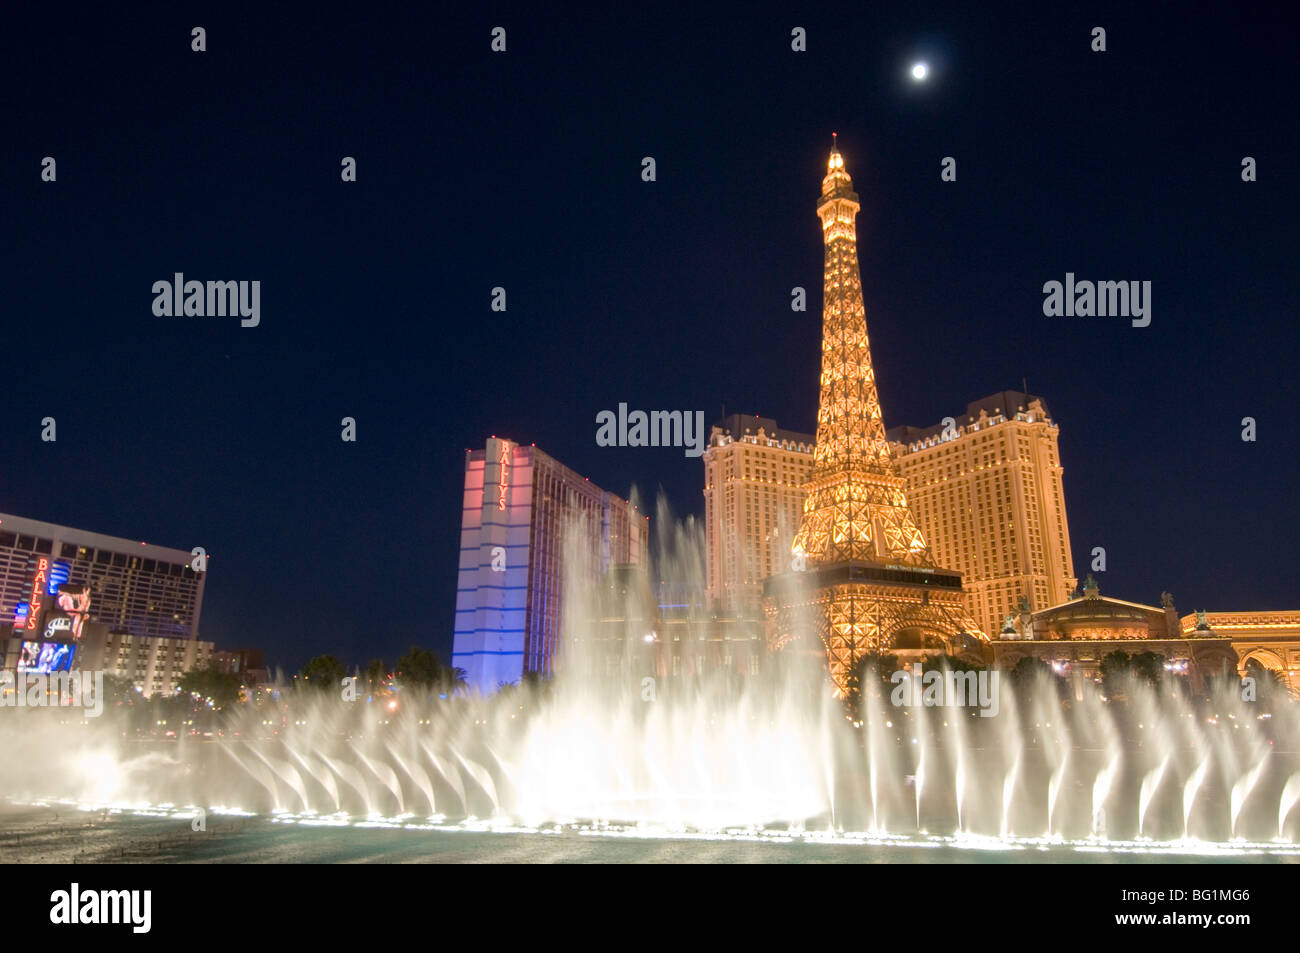 Fountains of Bellagio, Bellagio Hotel, Eiffel Tower of Paris Las Vegas in bg, The Strip, Las Vegas, Nevada, USA Stock Photo